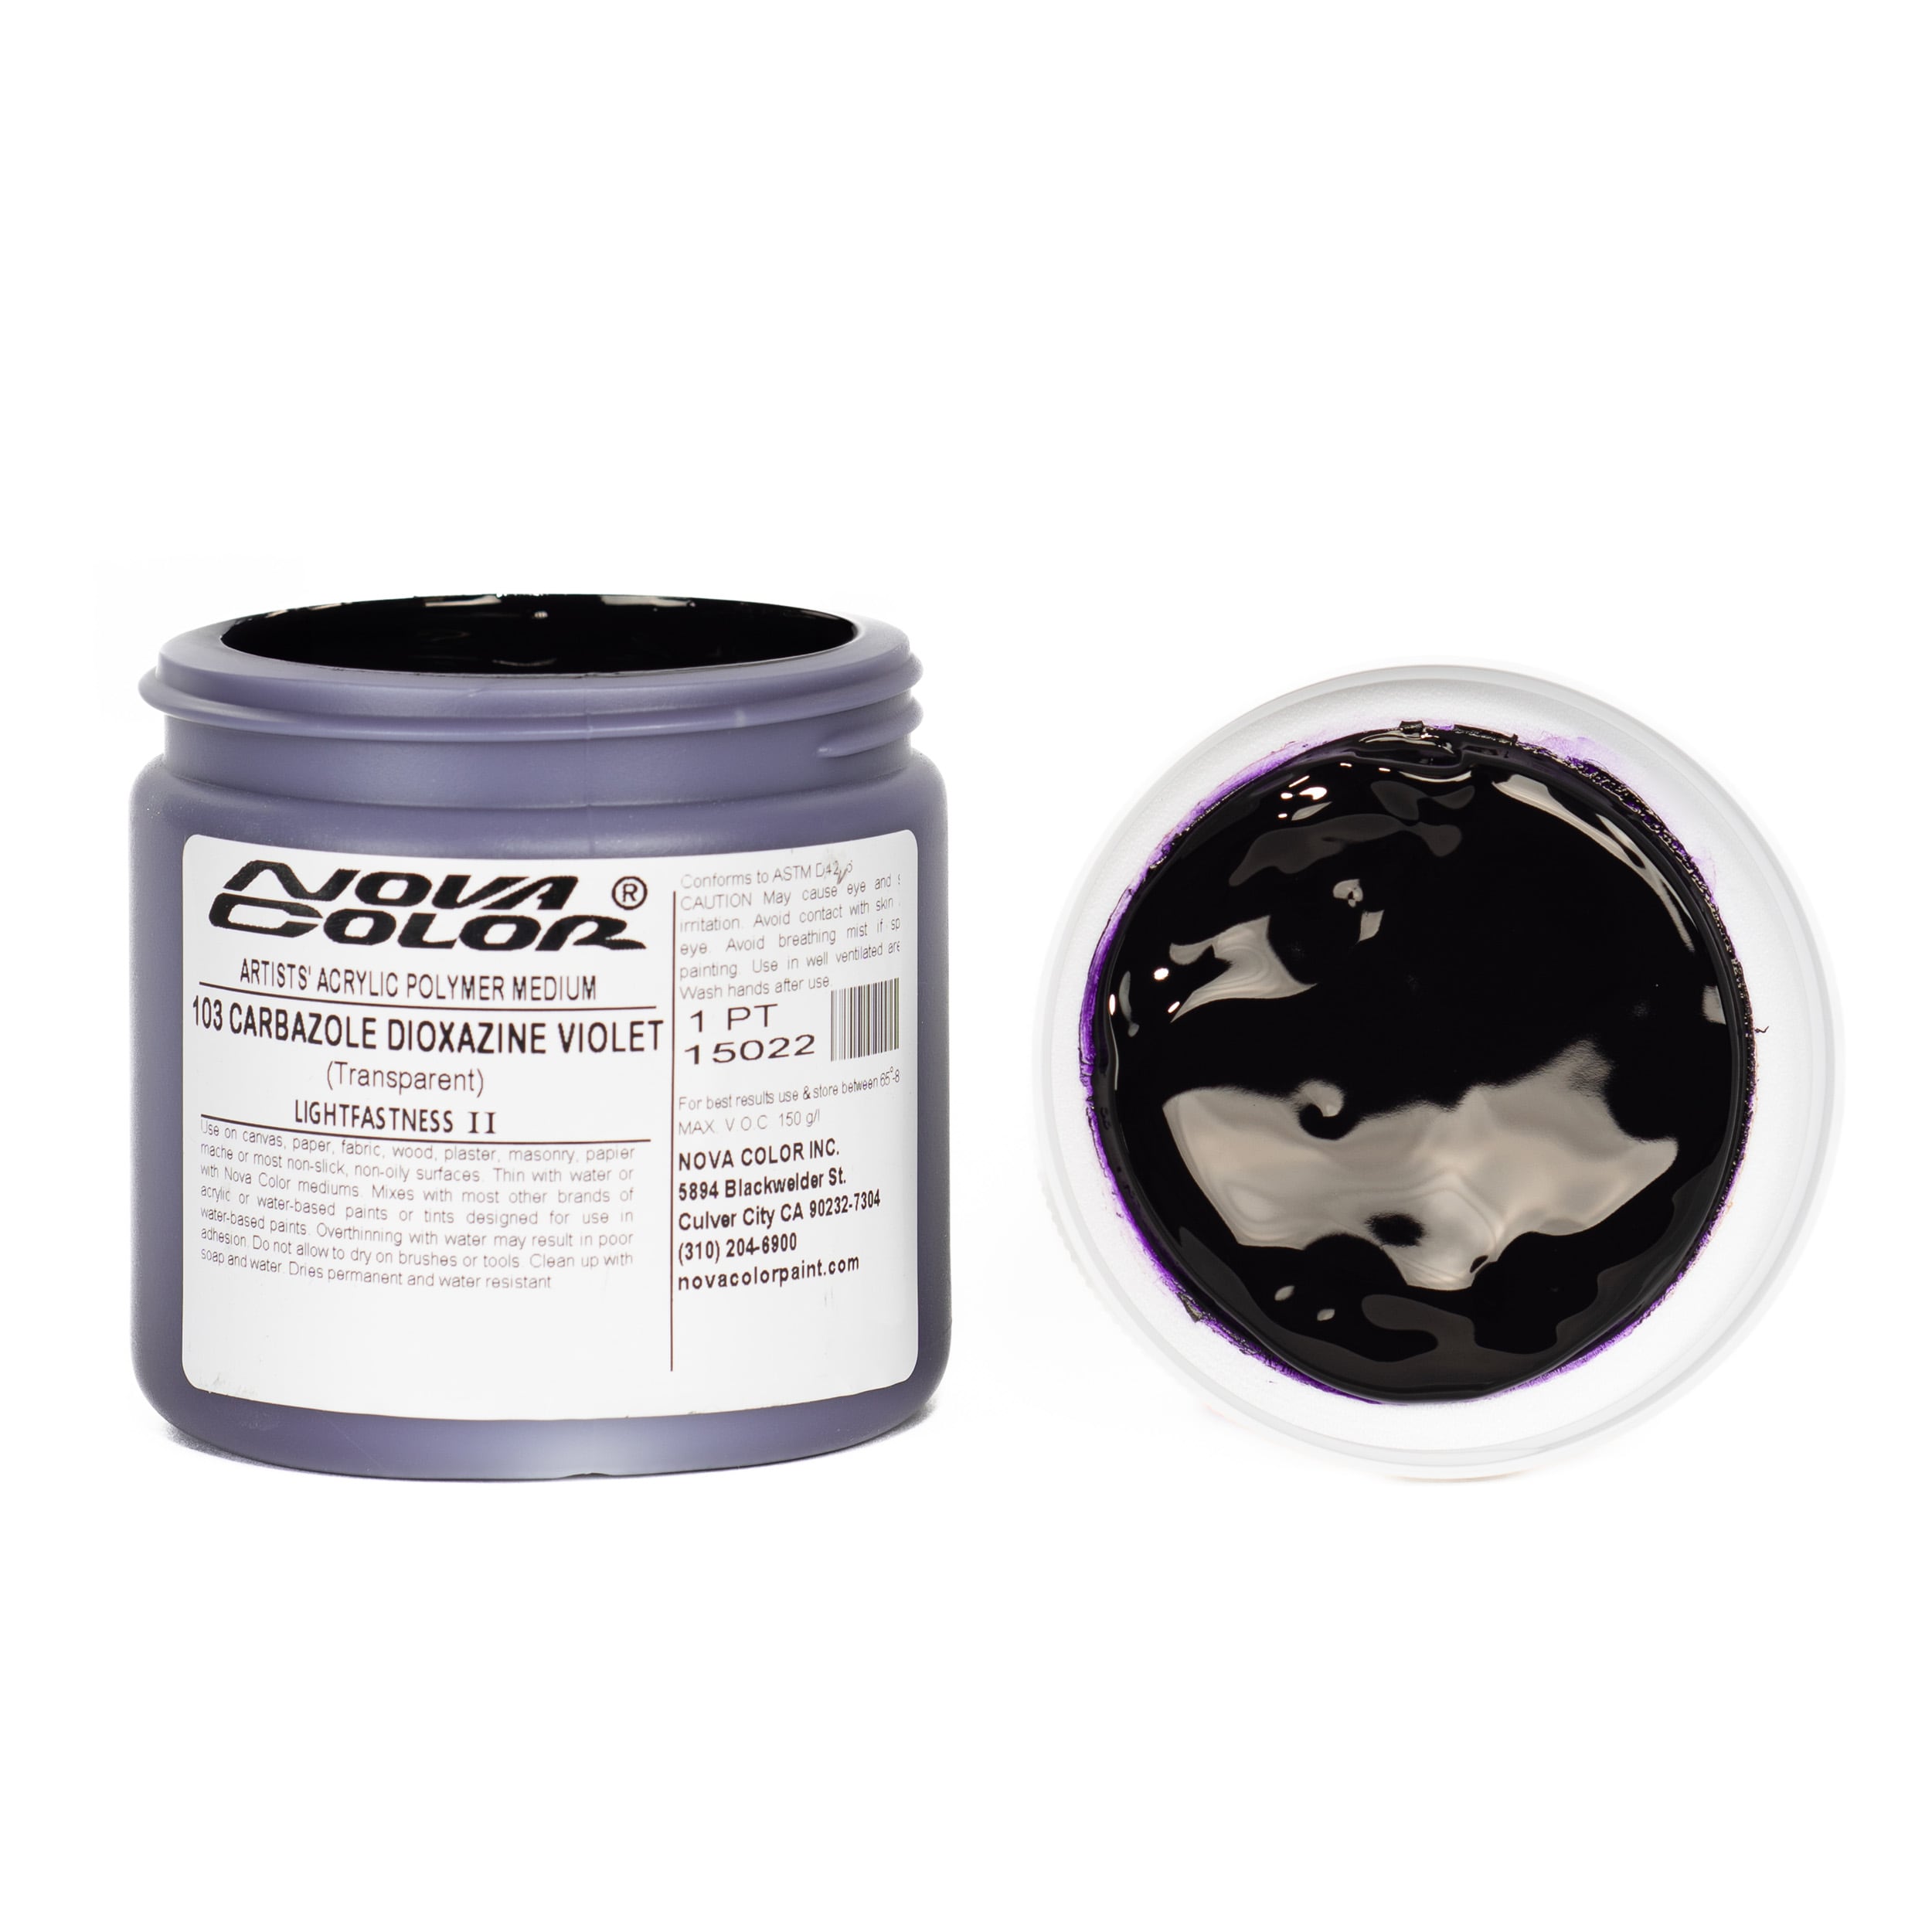 Maries Acrylic Paints - Dioxazine Violet - 75 ml